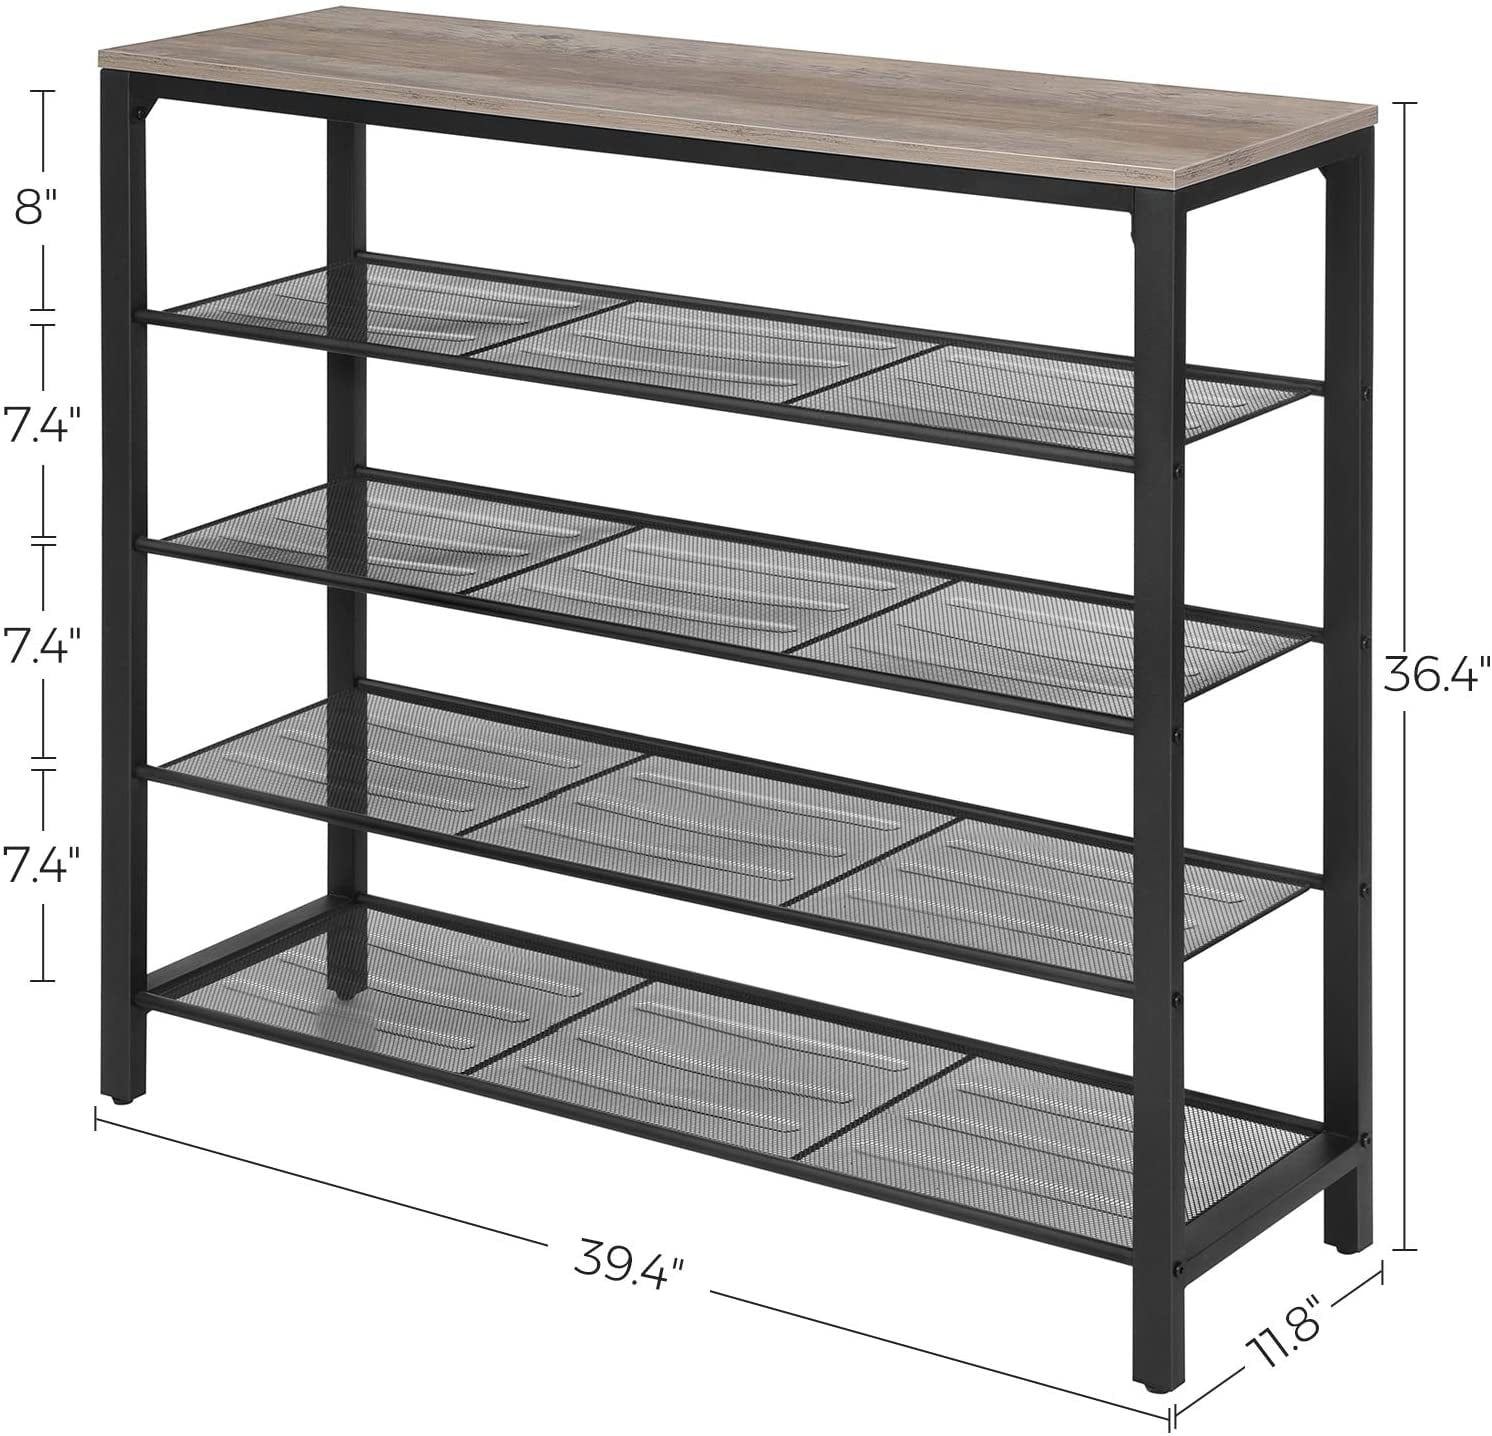 Shoe Rack 5-tier Shoe Storage Organizer W/4 Metal Mesh Shelves For 16-20  Pairs : Target